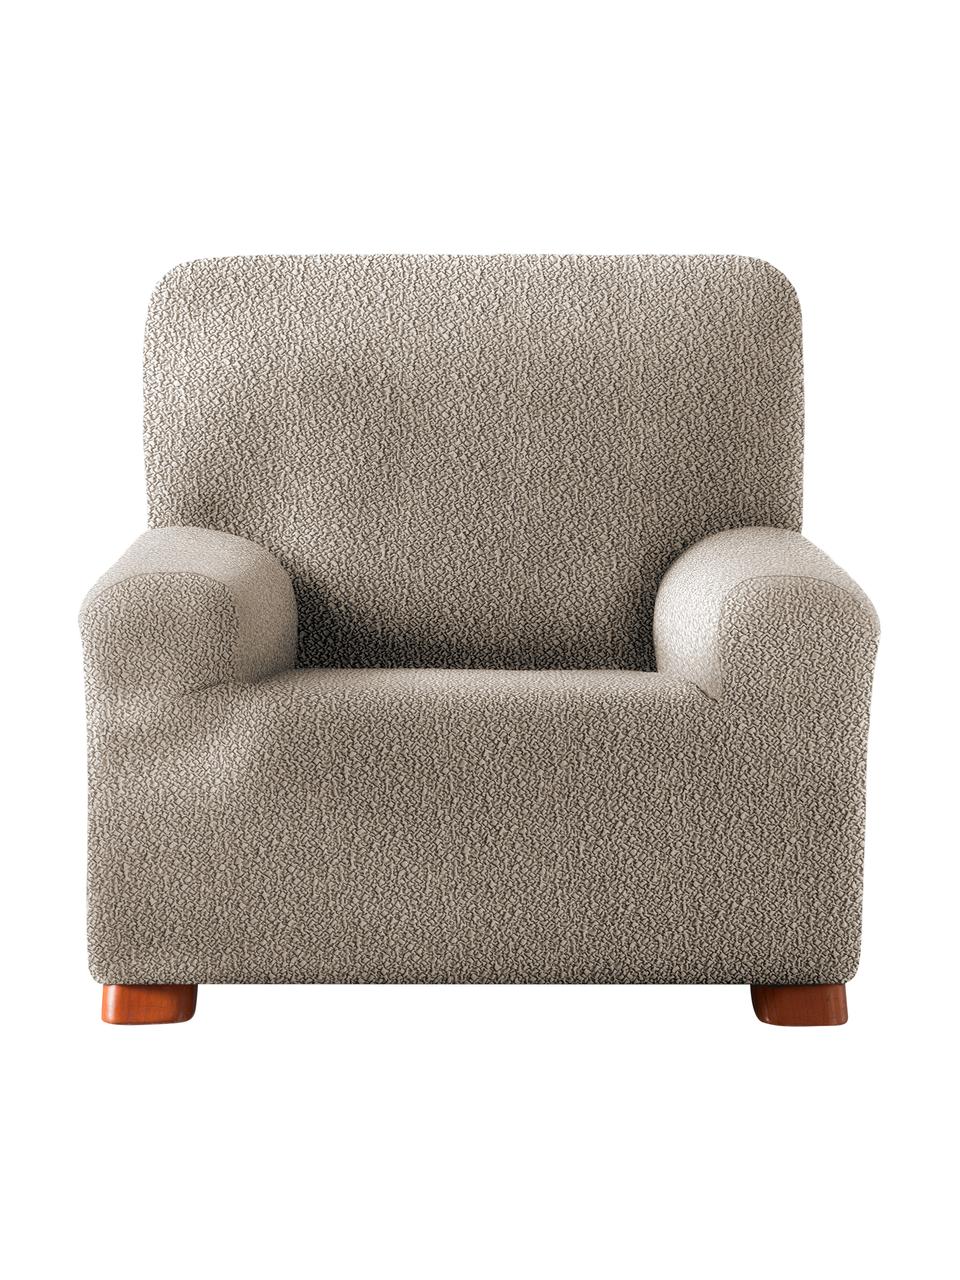 Funda de sillón Roc, 55% poliéster, 35% algodón, 10% elastómero, Beige, An 130 x Al 120 cm